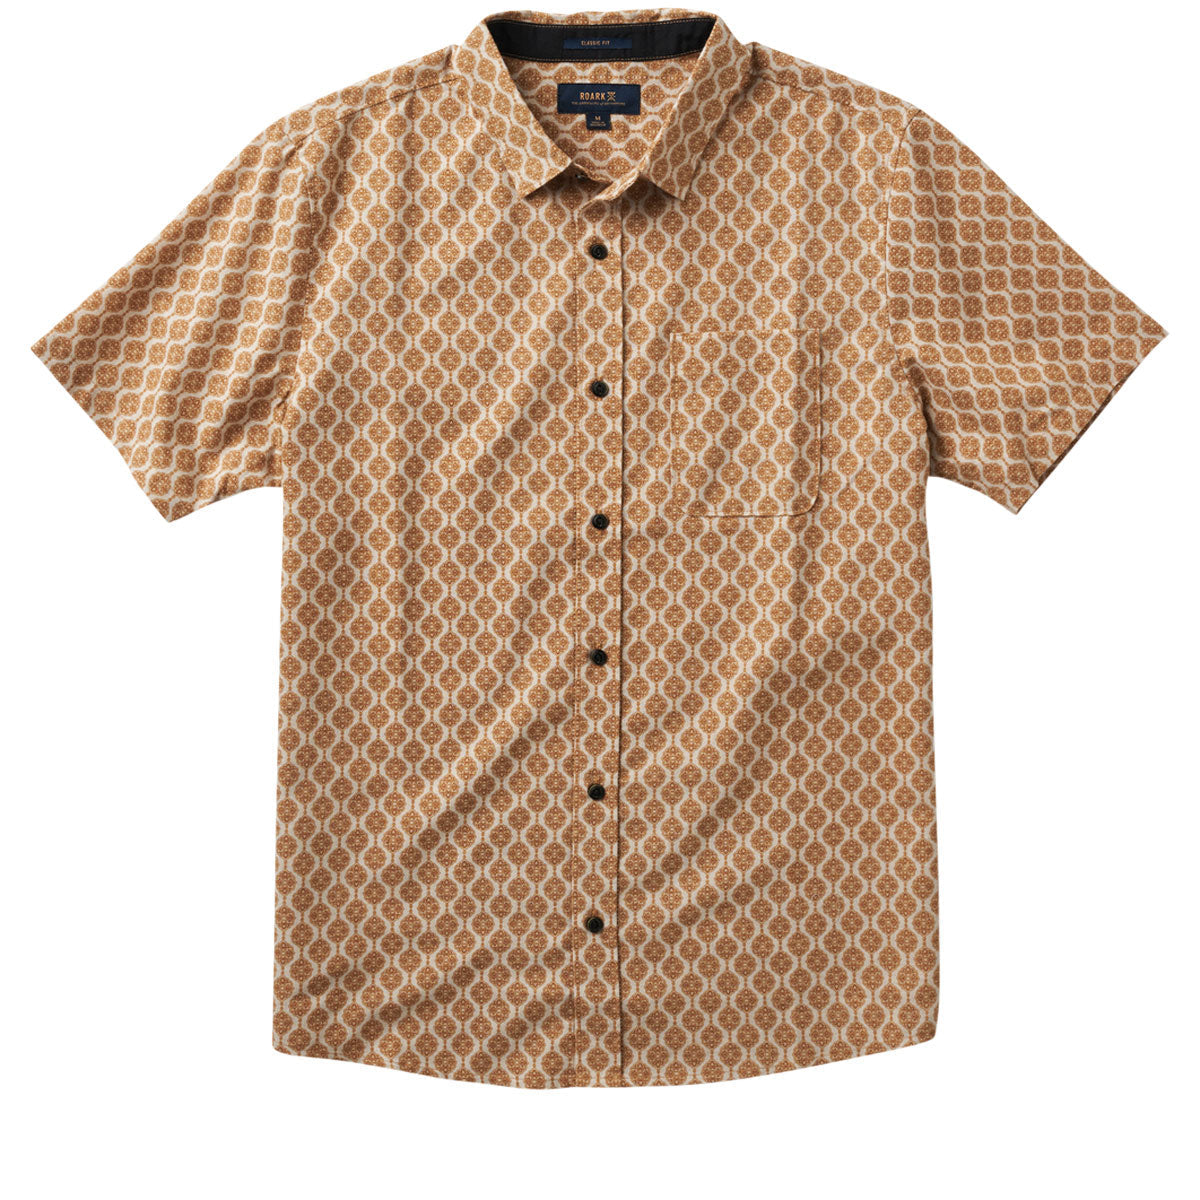 Roark Scholar Oxford Woven Shirt - Pignoli image 4